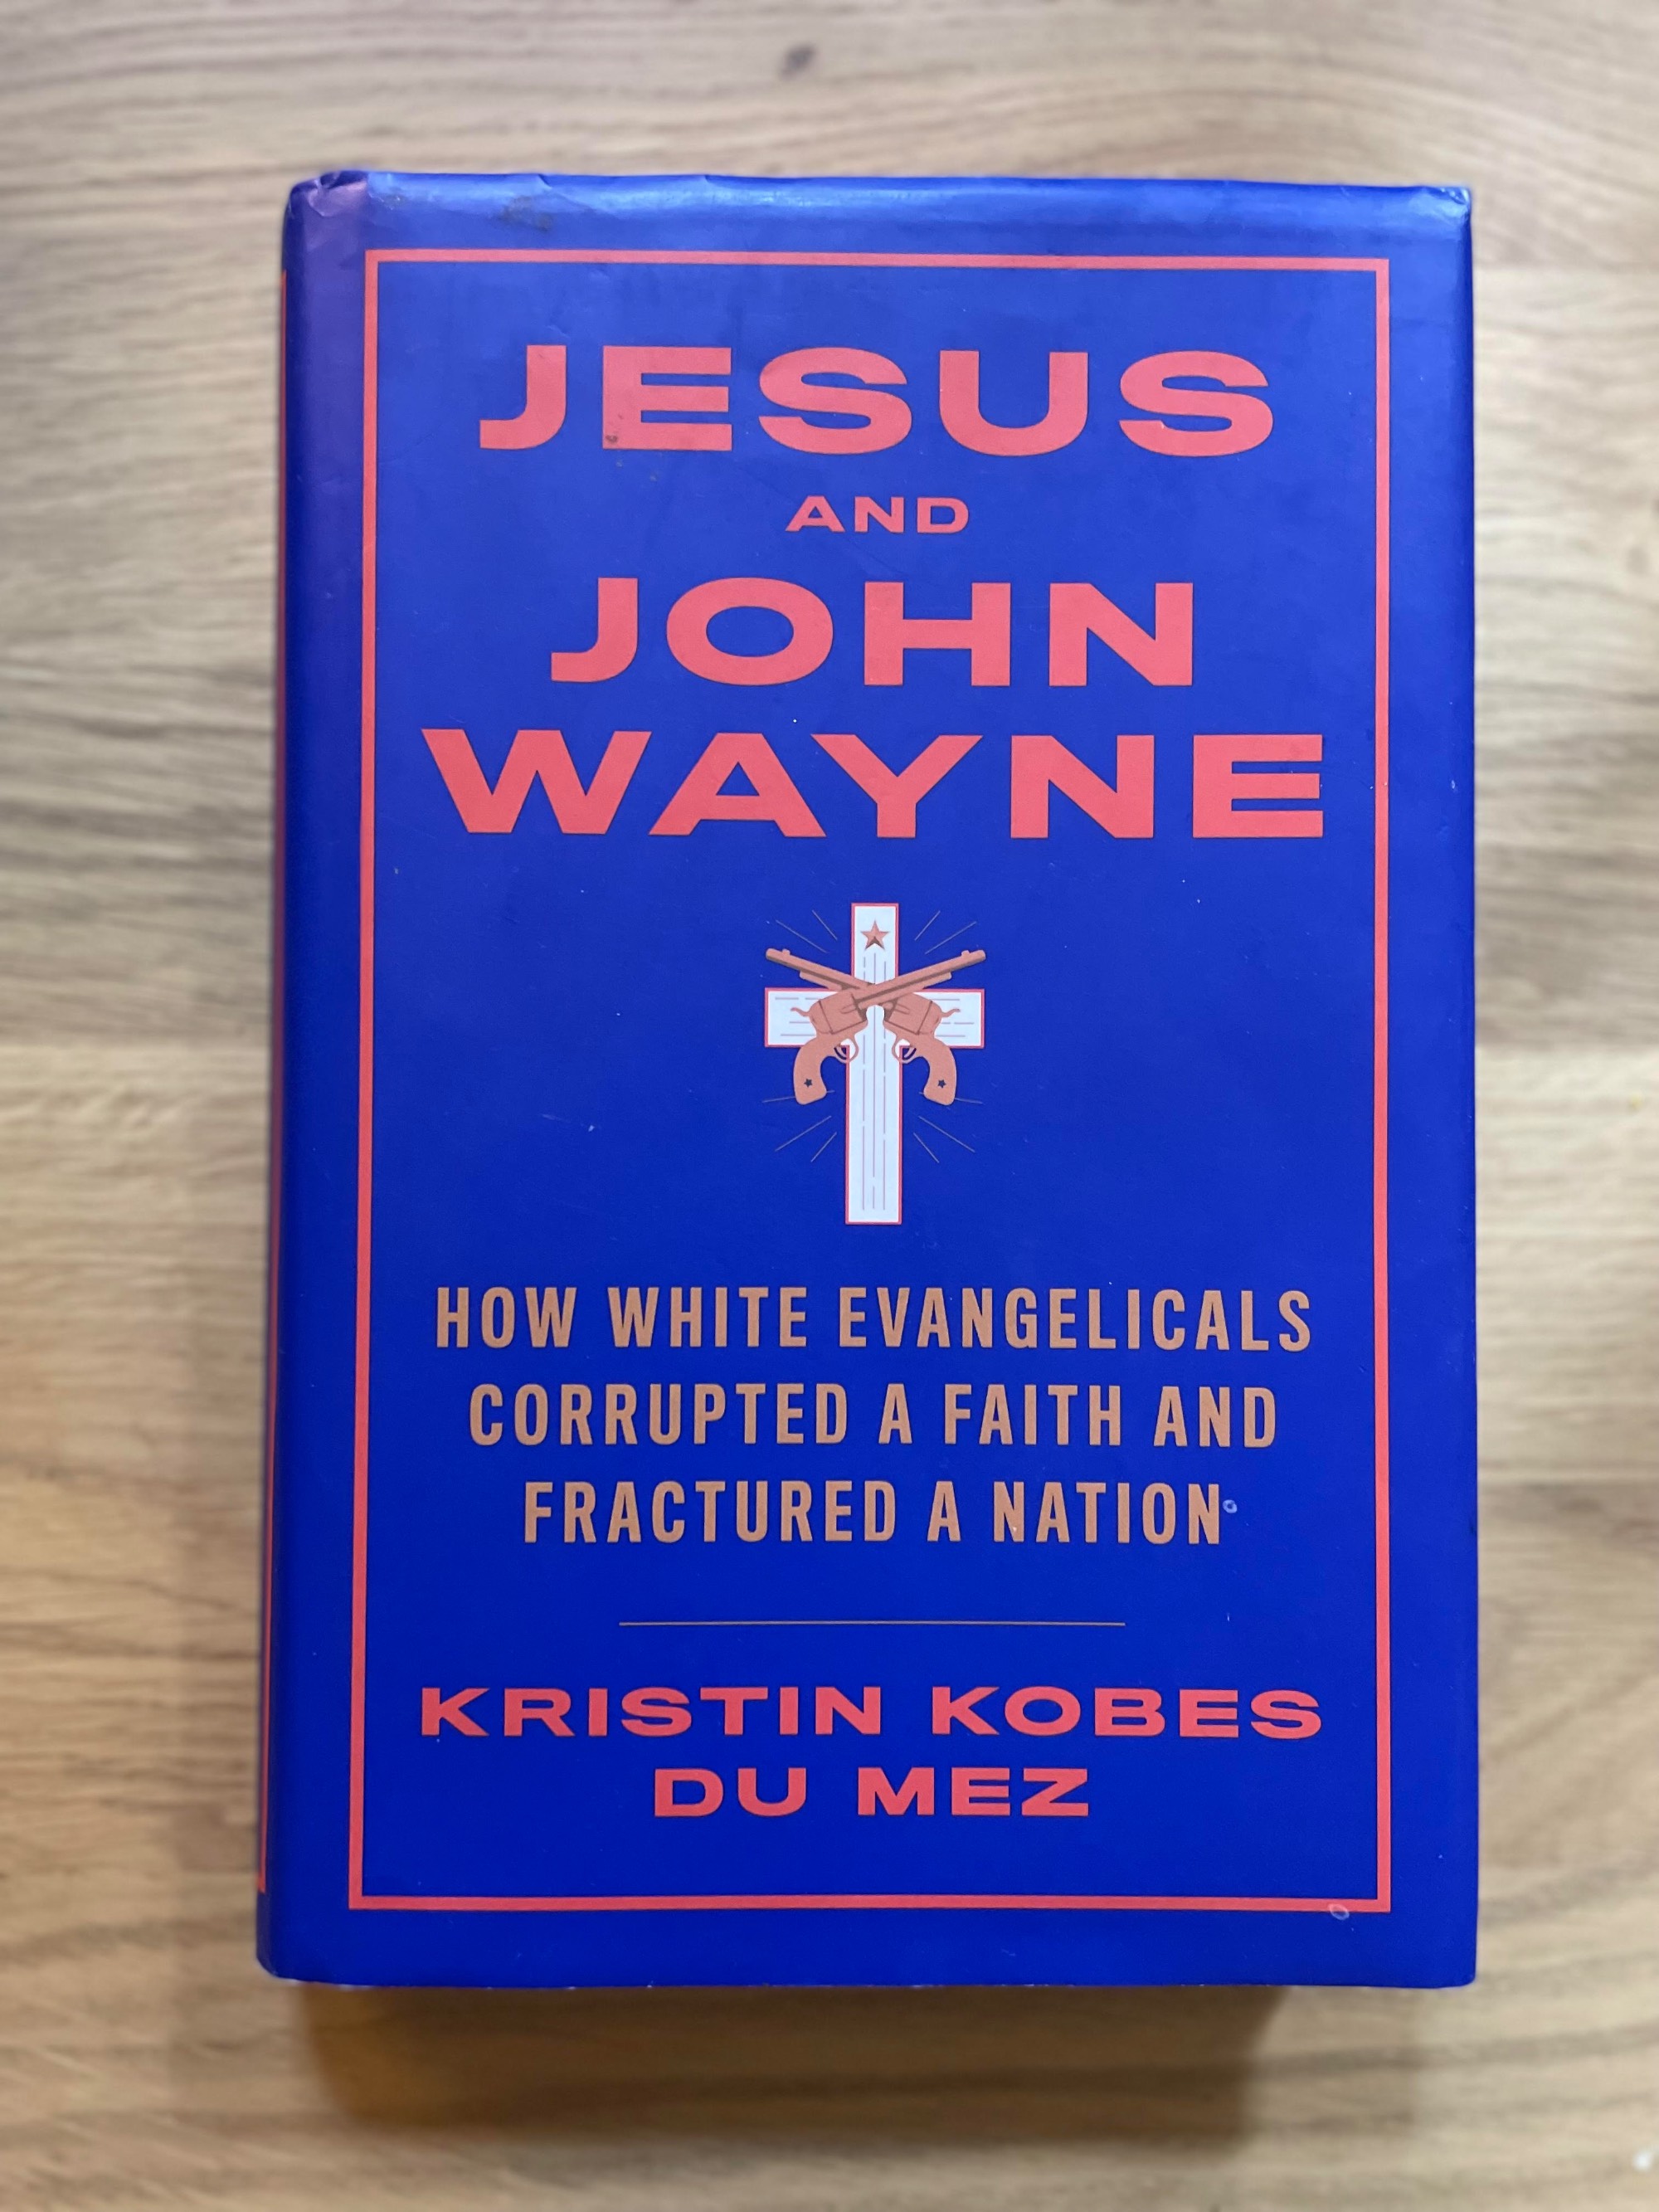 Photo of the book Jesus and John Wayne